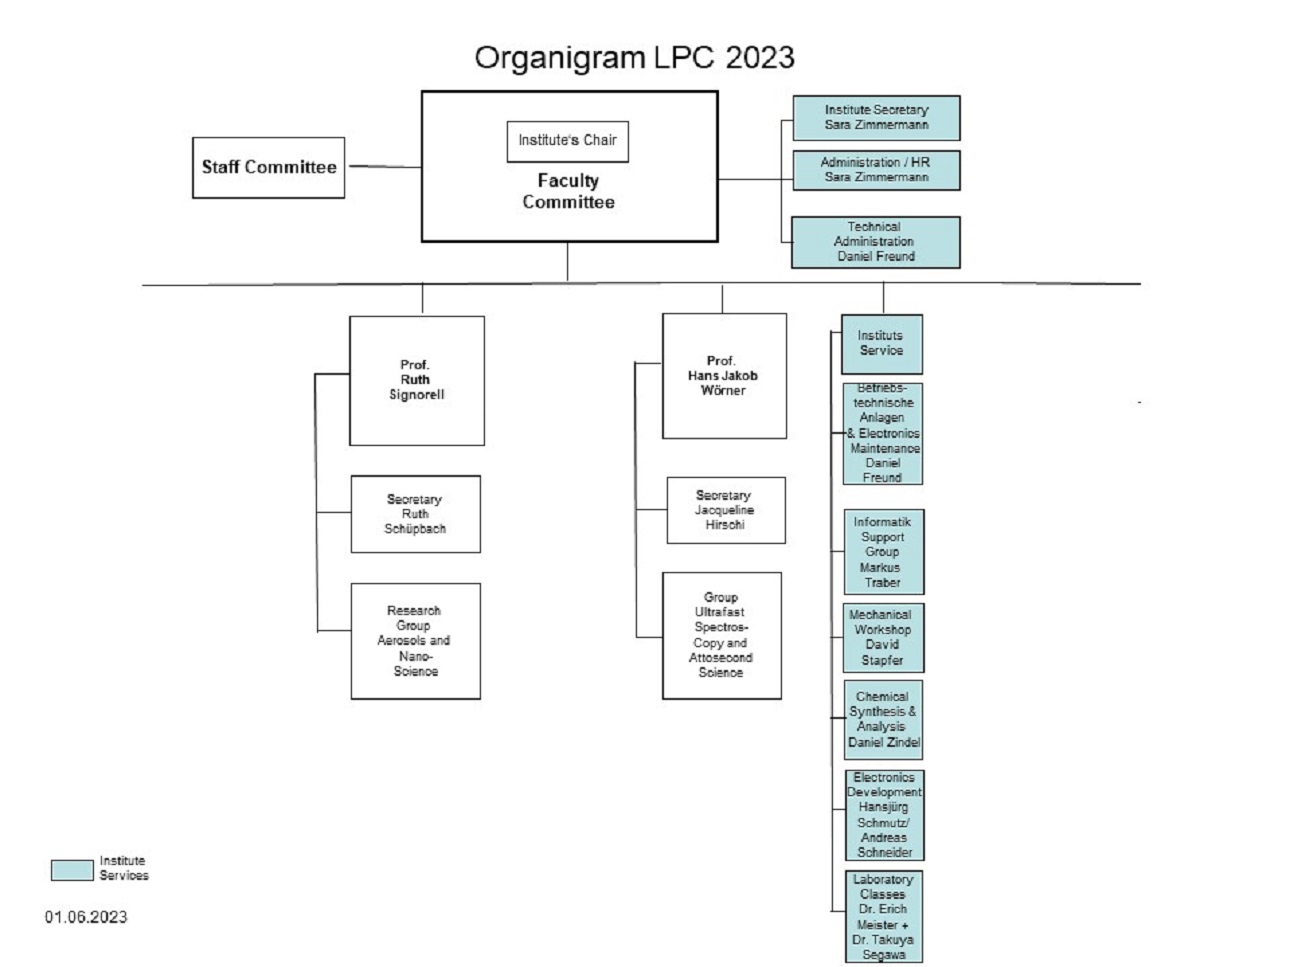 Enlarged view: Organigram LPC 2023